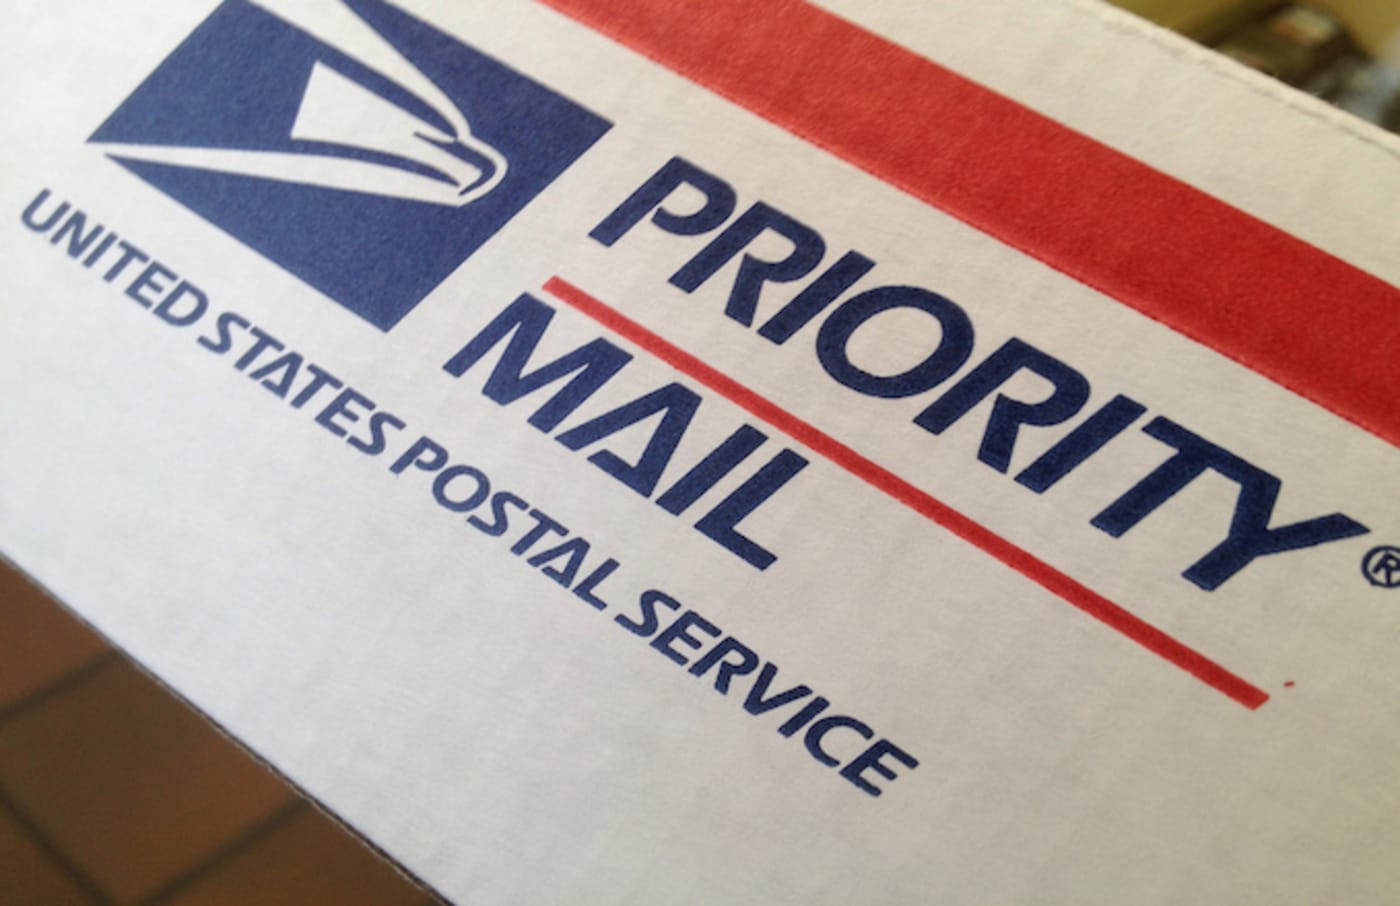 us postal service forward mail online